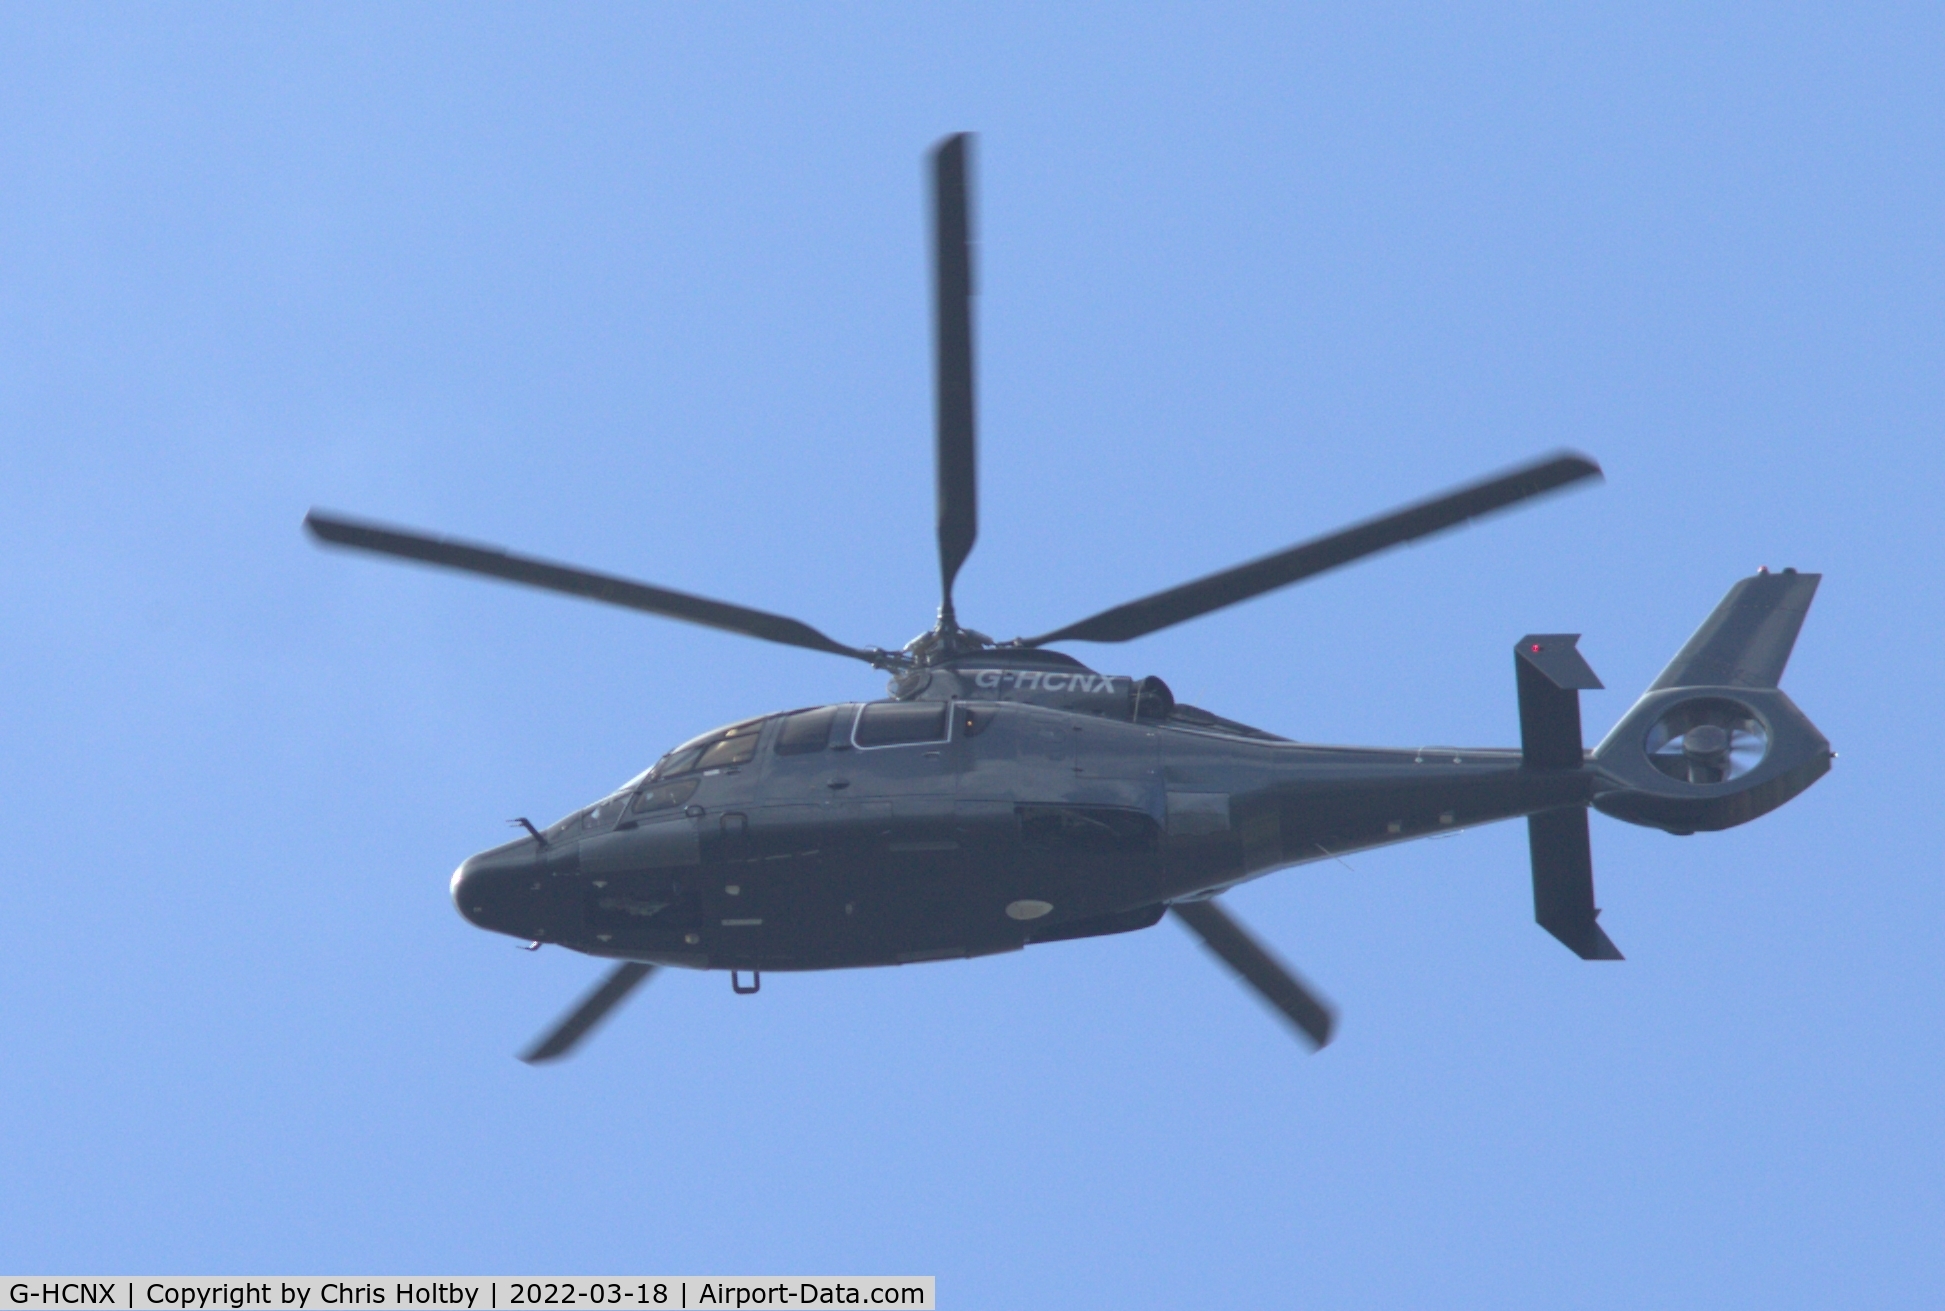 G-HCNX, 2007 Eurocopter EC-155B-1 C/N 6771, Eurocopter 155B over Panshanger Park in Herts.